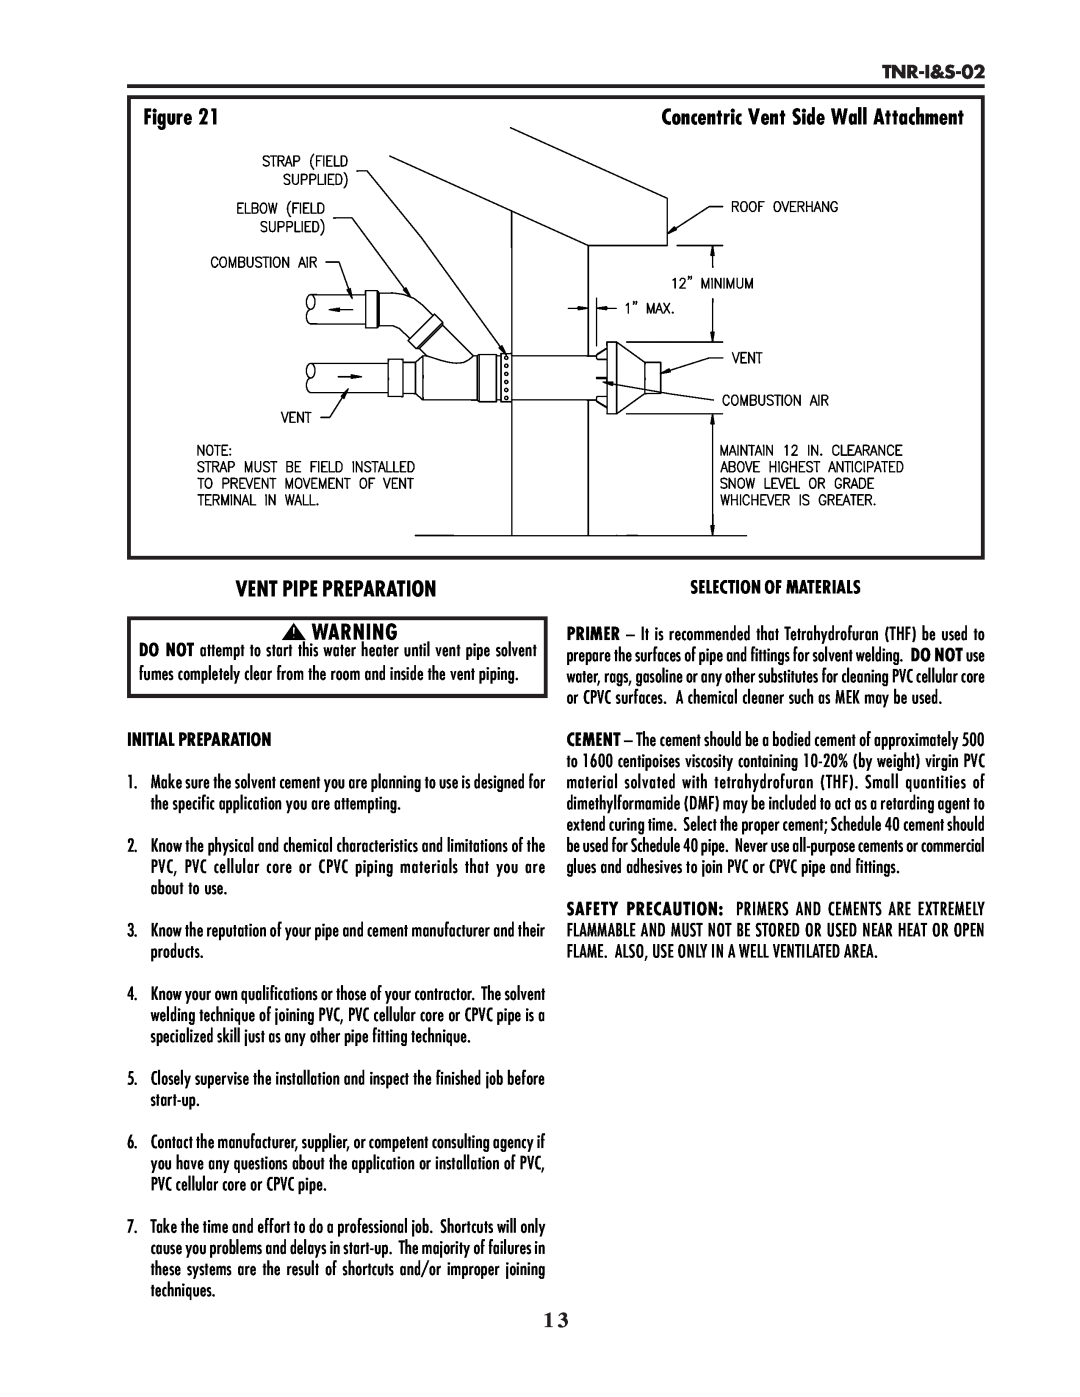 Lochinvar TNR-I&S-02 service manual Vent Pipe Preparation, Concentric Vent Side Wall Attachment, Initial Preparation 